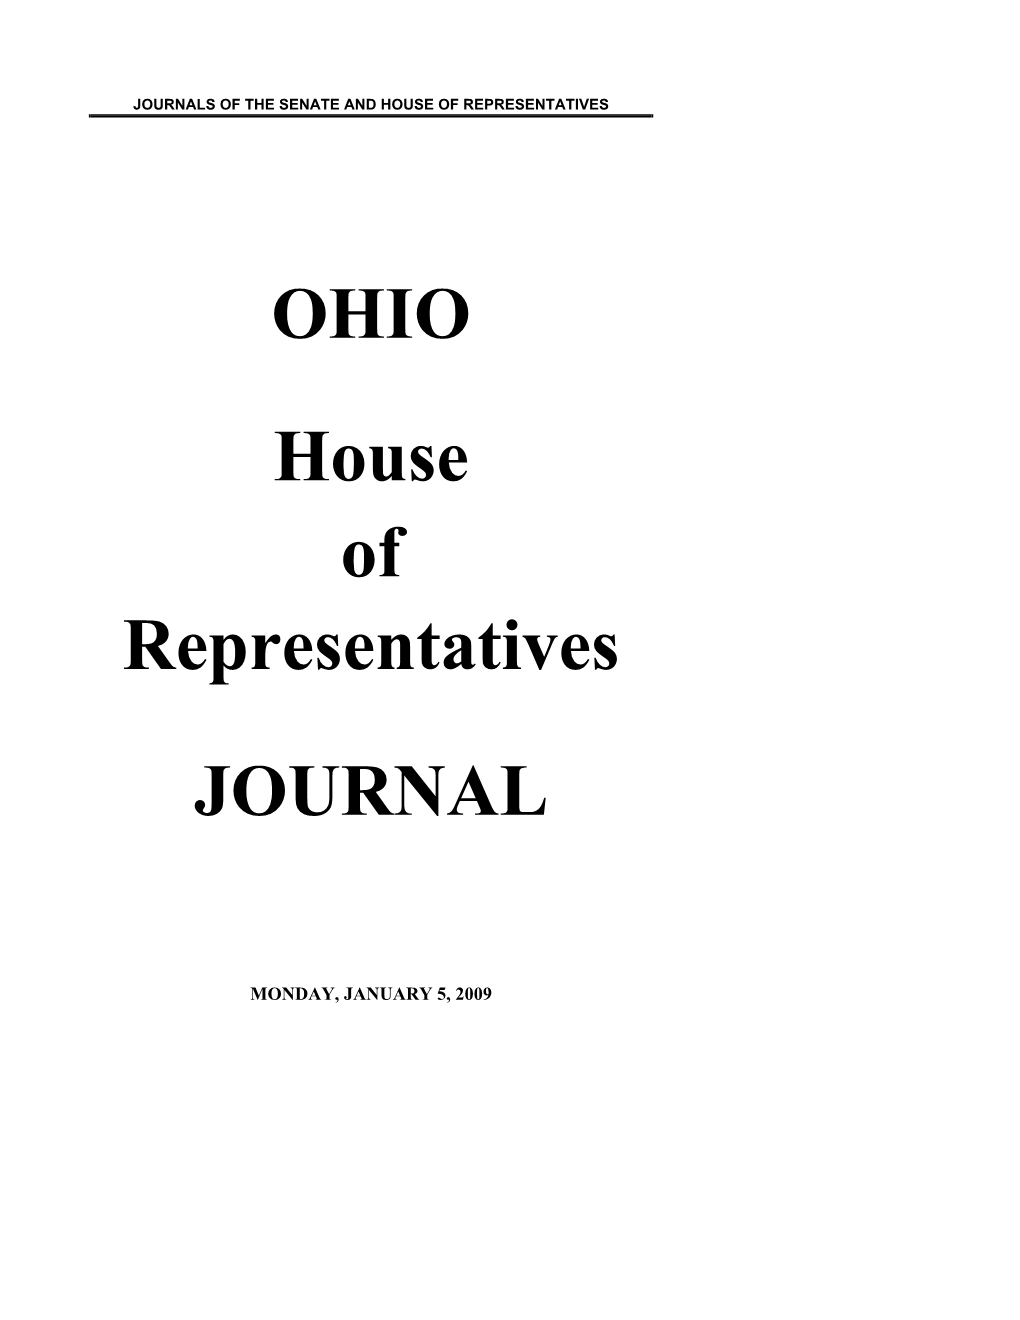 OHIO House of Representatives JOURNAL